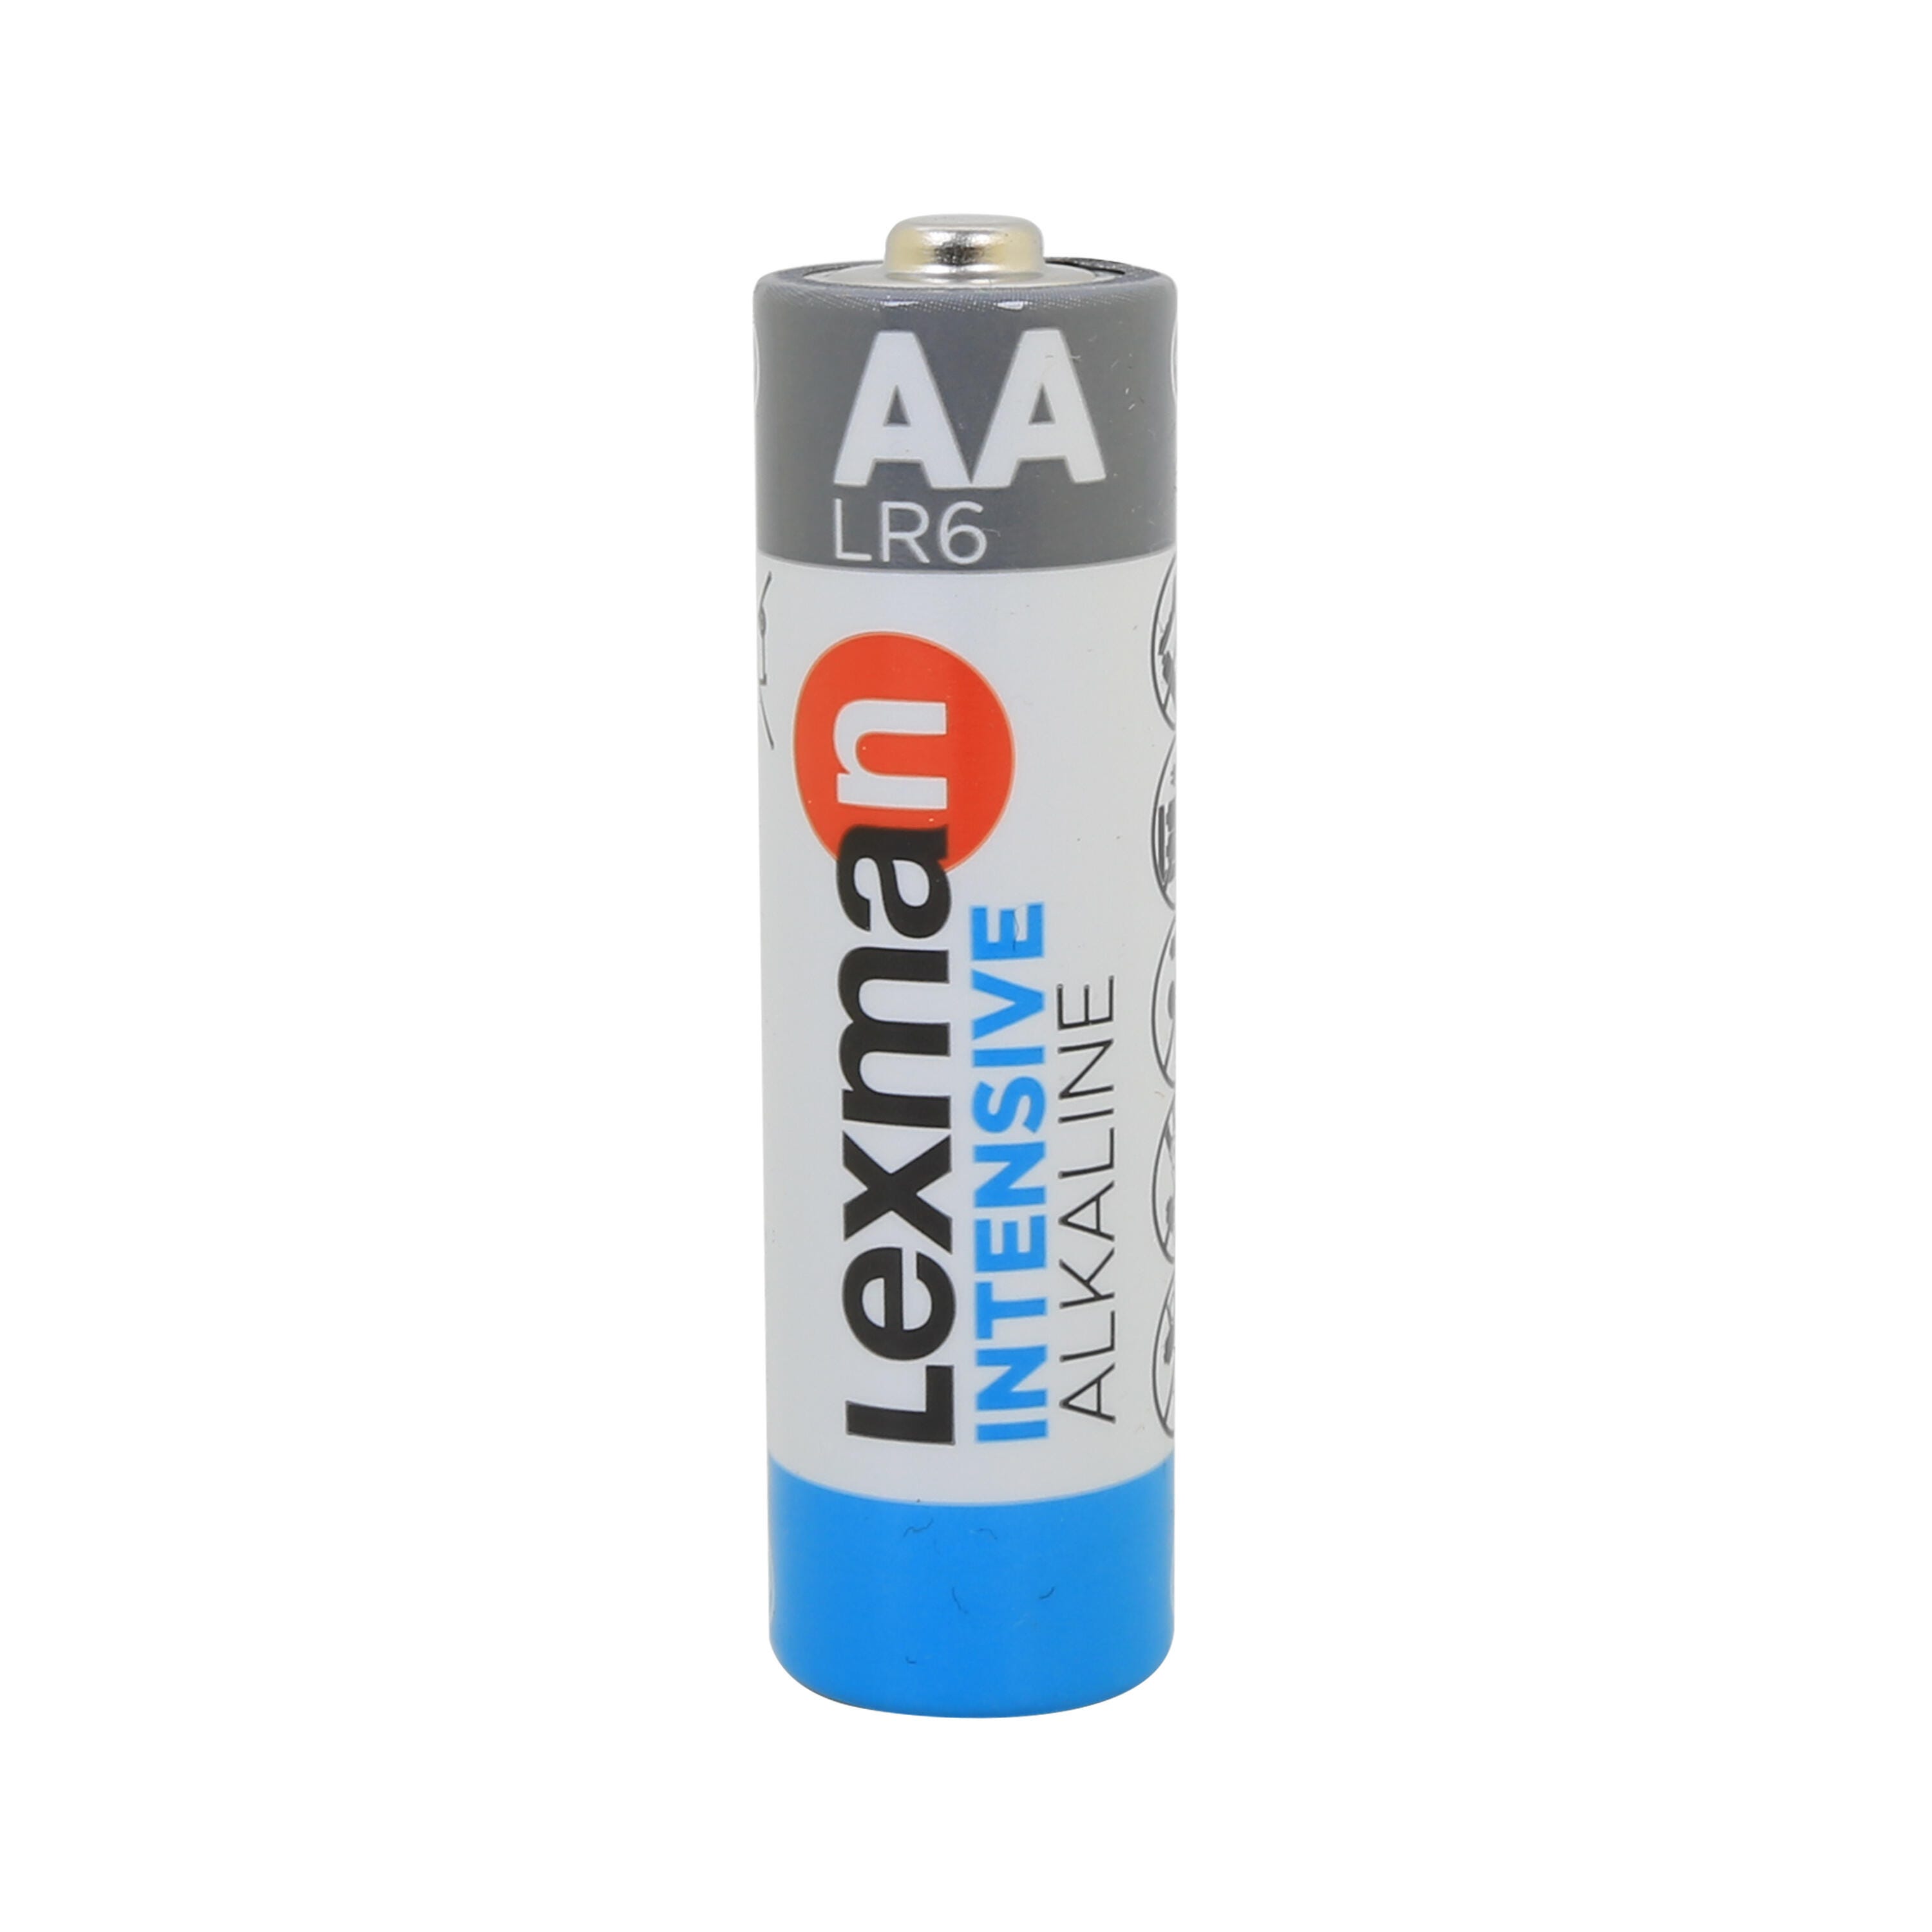 Lot de 10 piles batterie lithium et alkaline lr03 aaa, 1.5 V, PAIRDEER